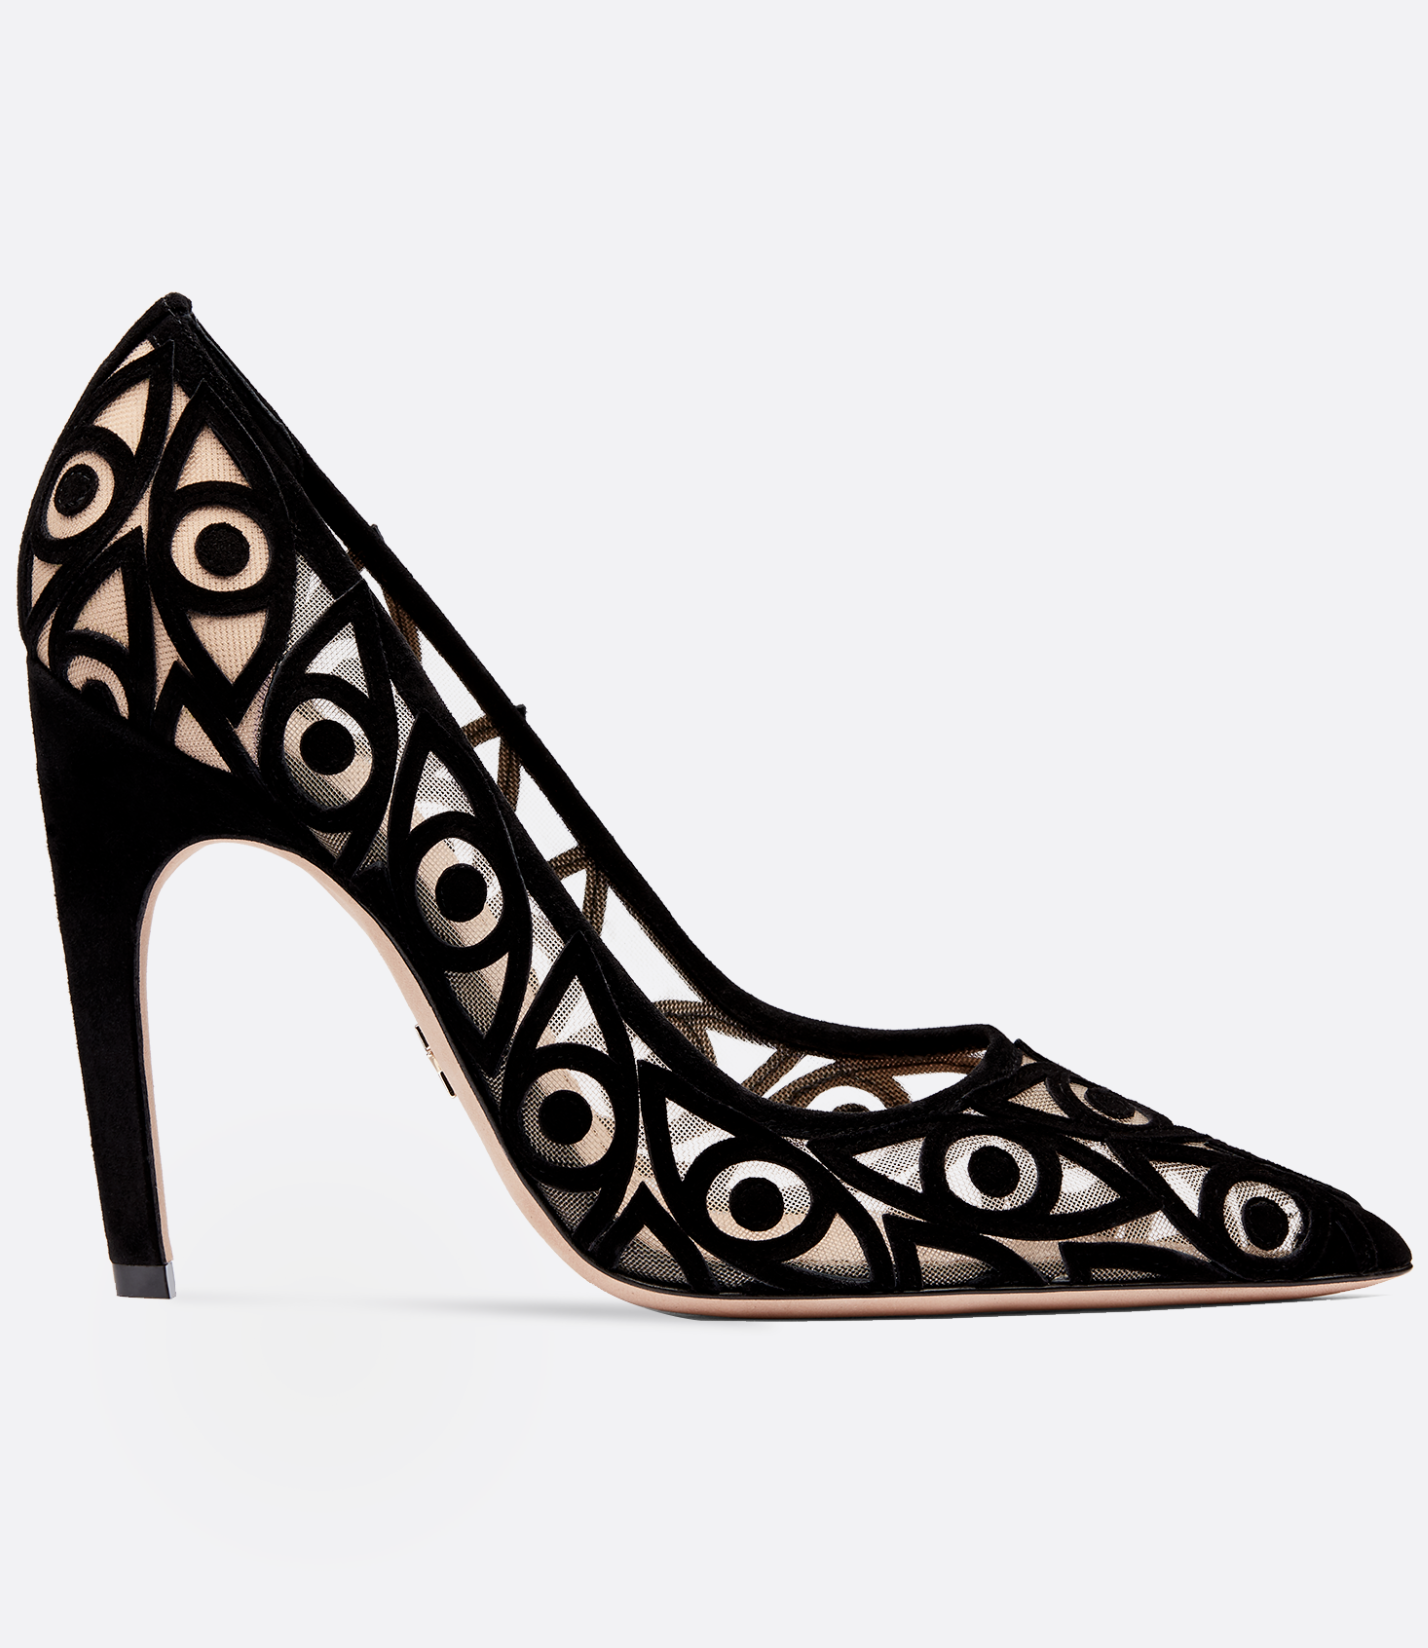 Scarpe Nere Eleganti: 7 modelli di décolletées moda scarpe 2019